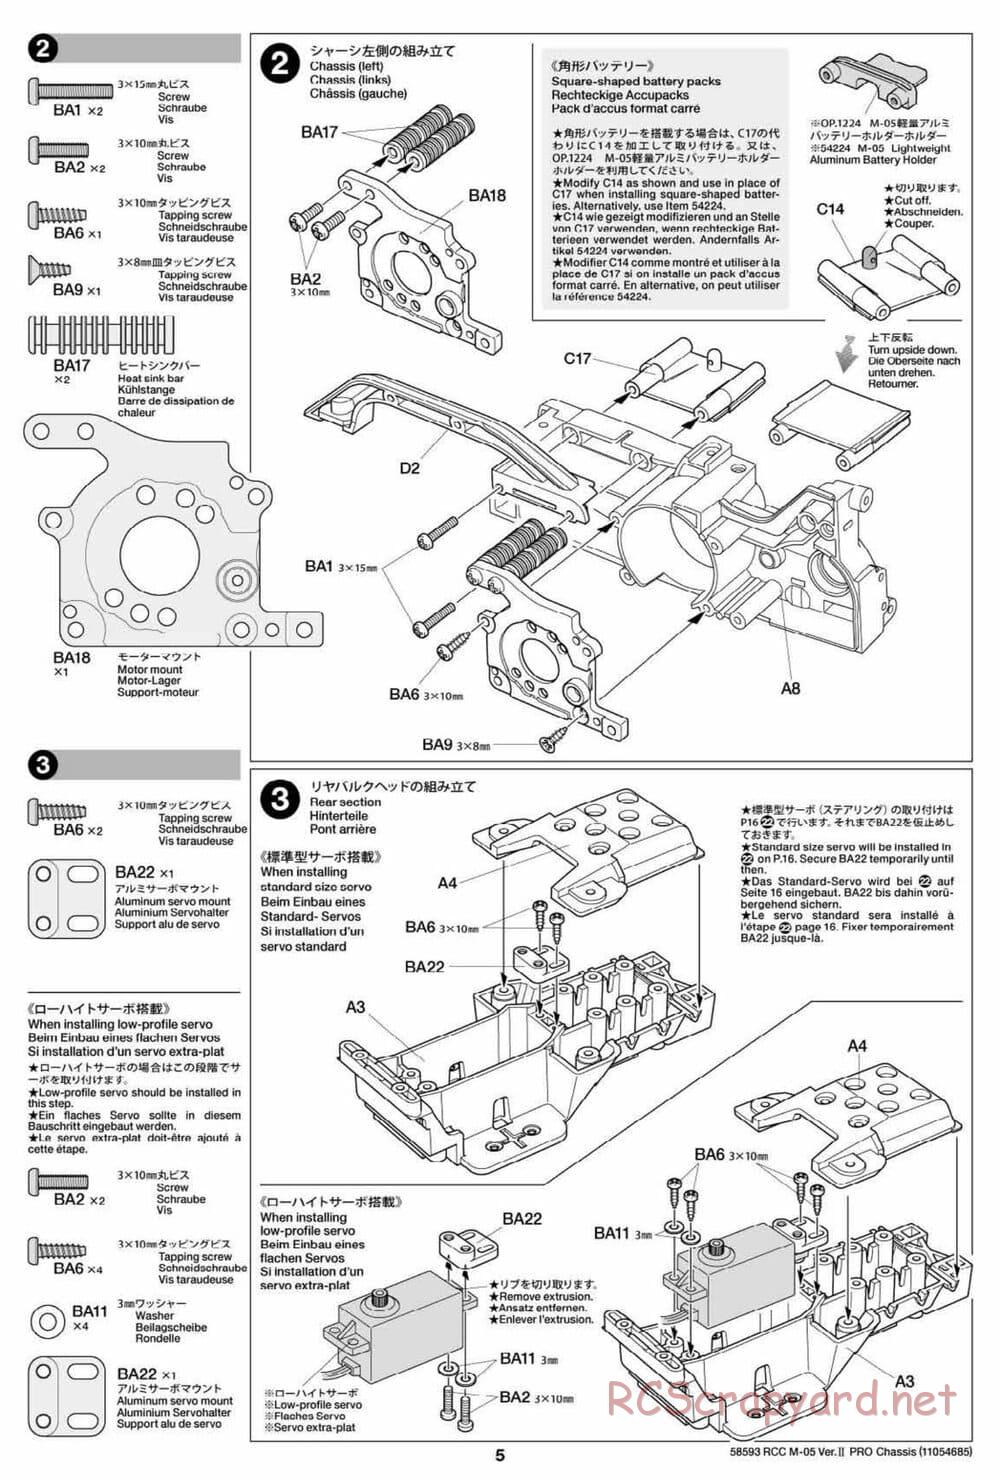 Tamiya - M-05 Ver.II Pro Chassis - Manual - Page 5